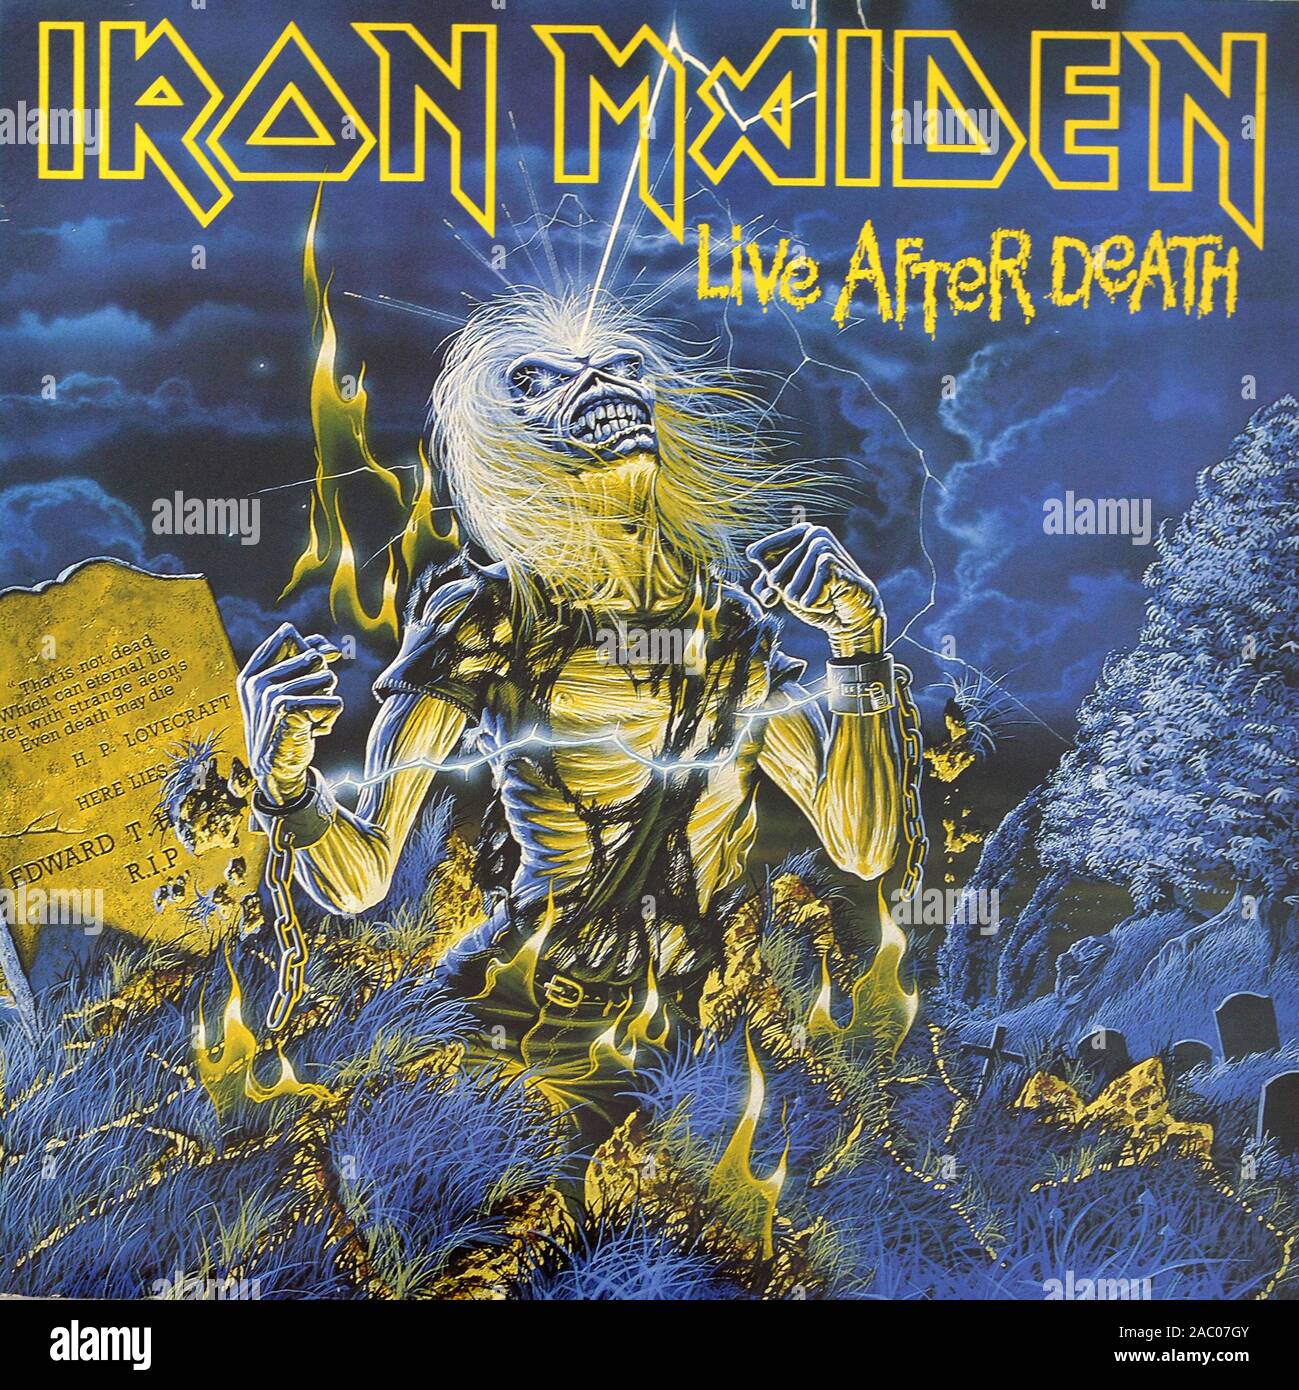 Iron Maiden Live dopo la morte - Vintage vinile copertina album Foto stock  - Alamy